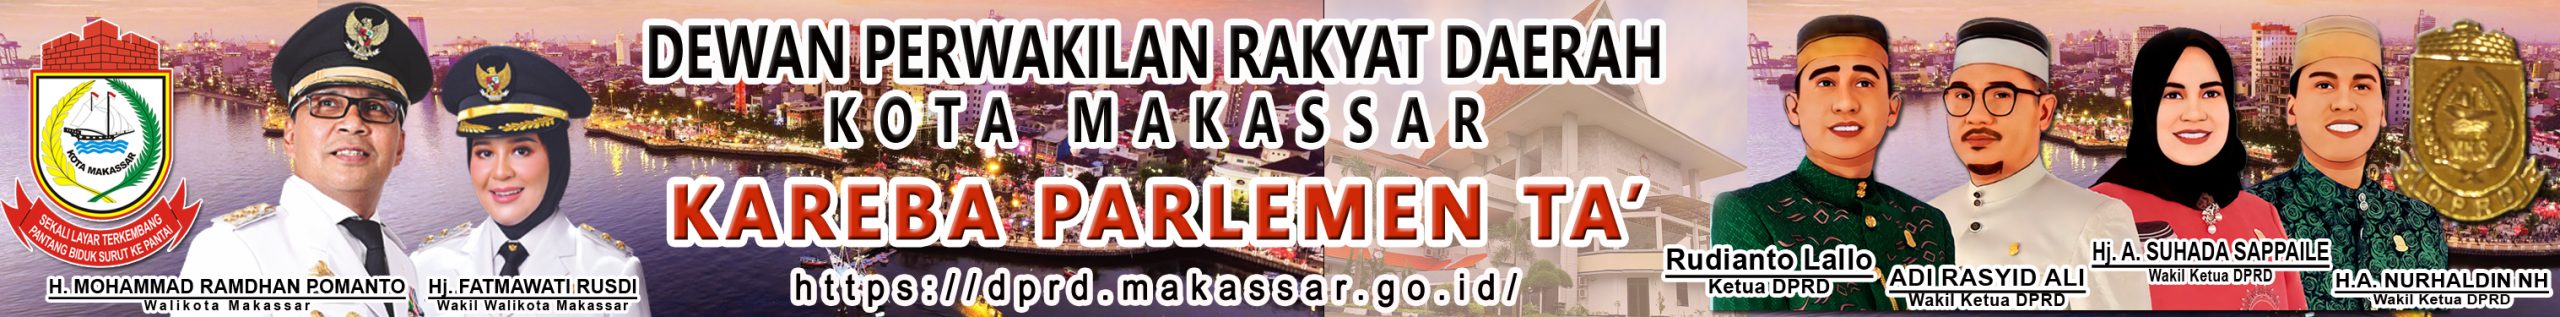 banner walikota makassar